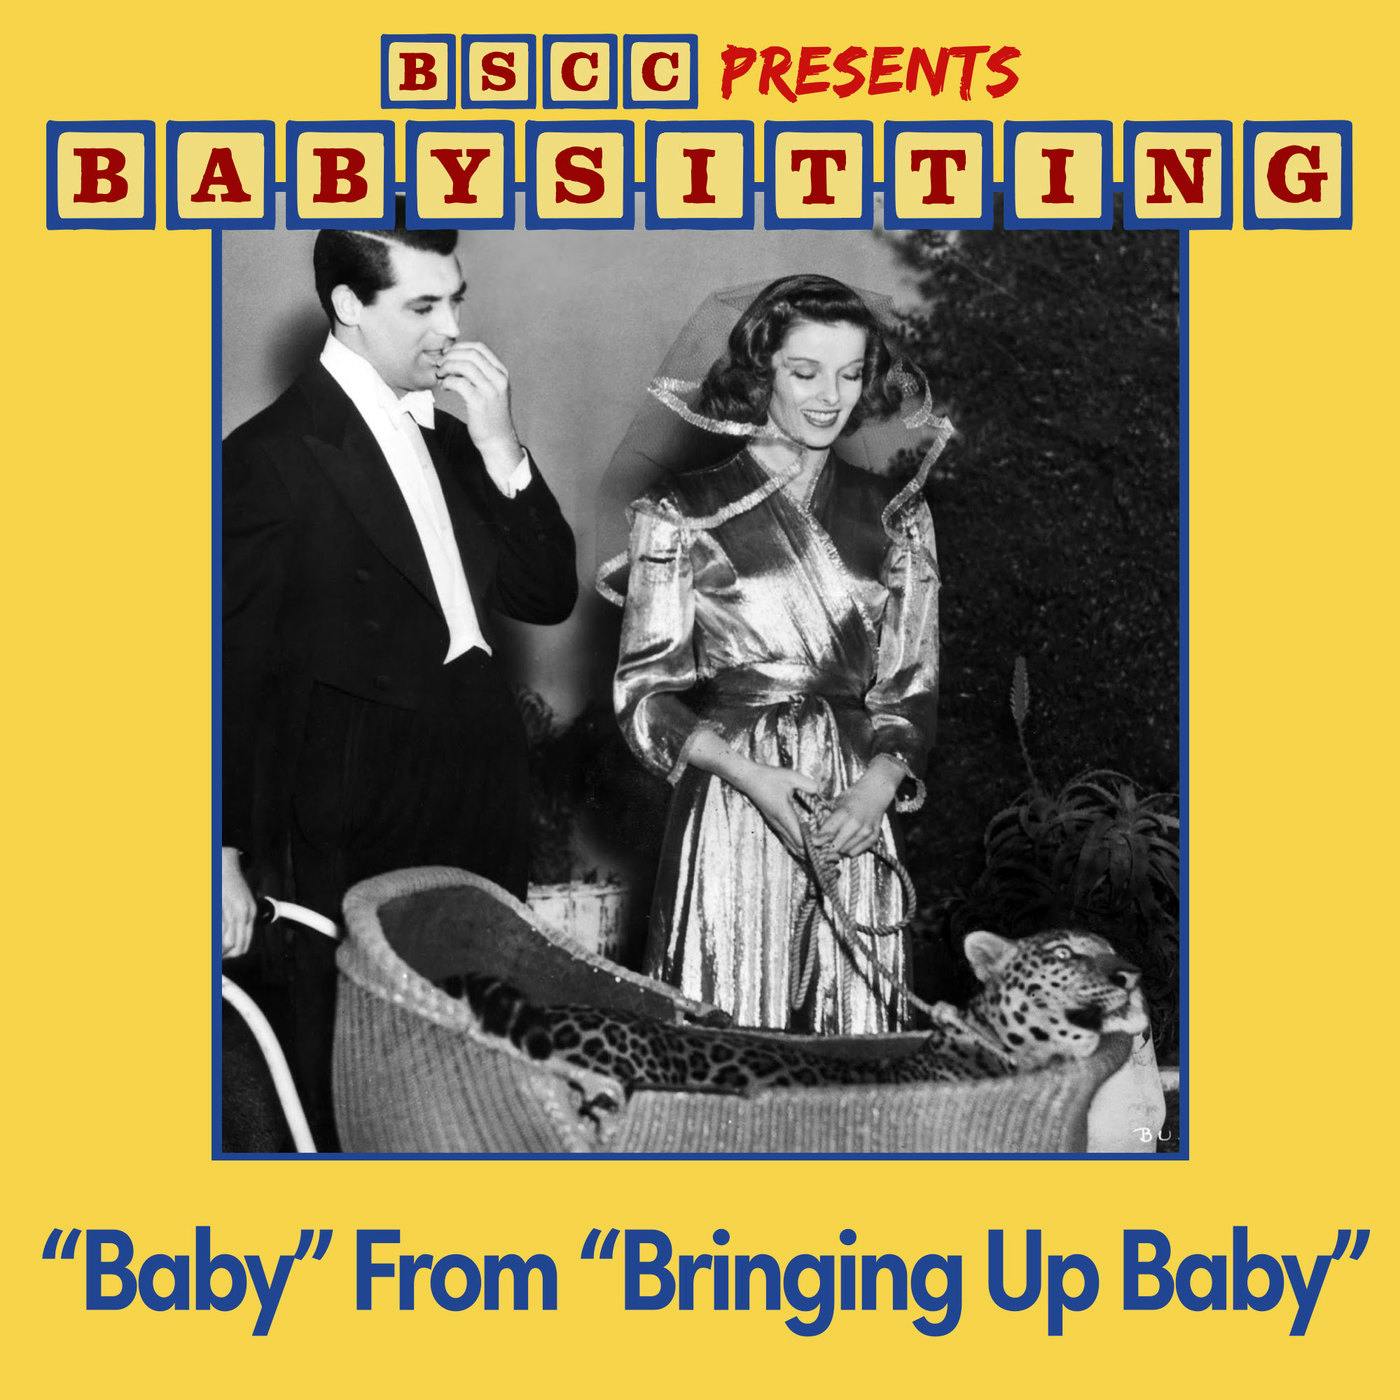 BSCC Presents: Babysitting 